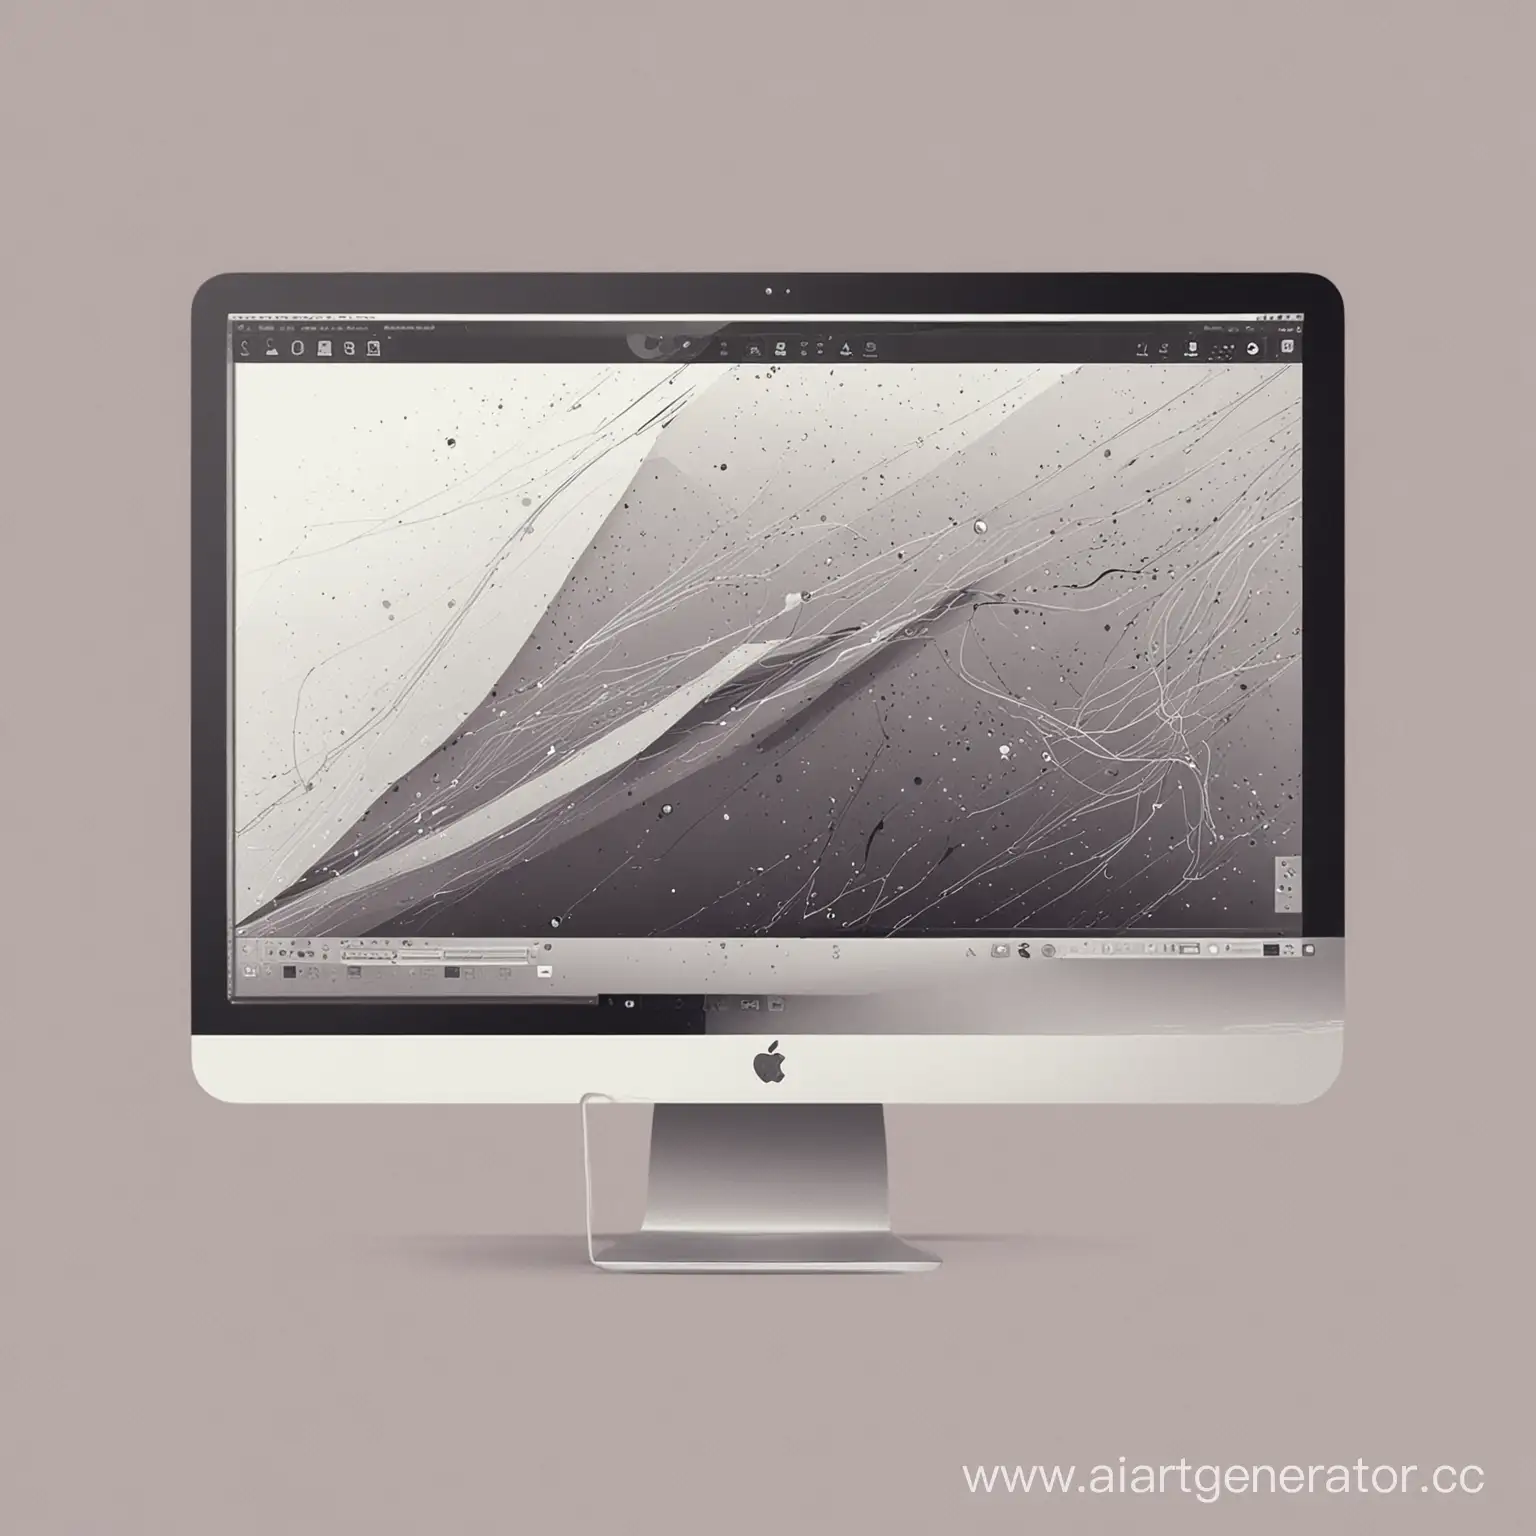 Digital-Art-Creation-Process-Illustrating-on-Adobe-Illustrator